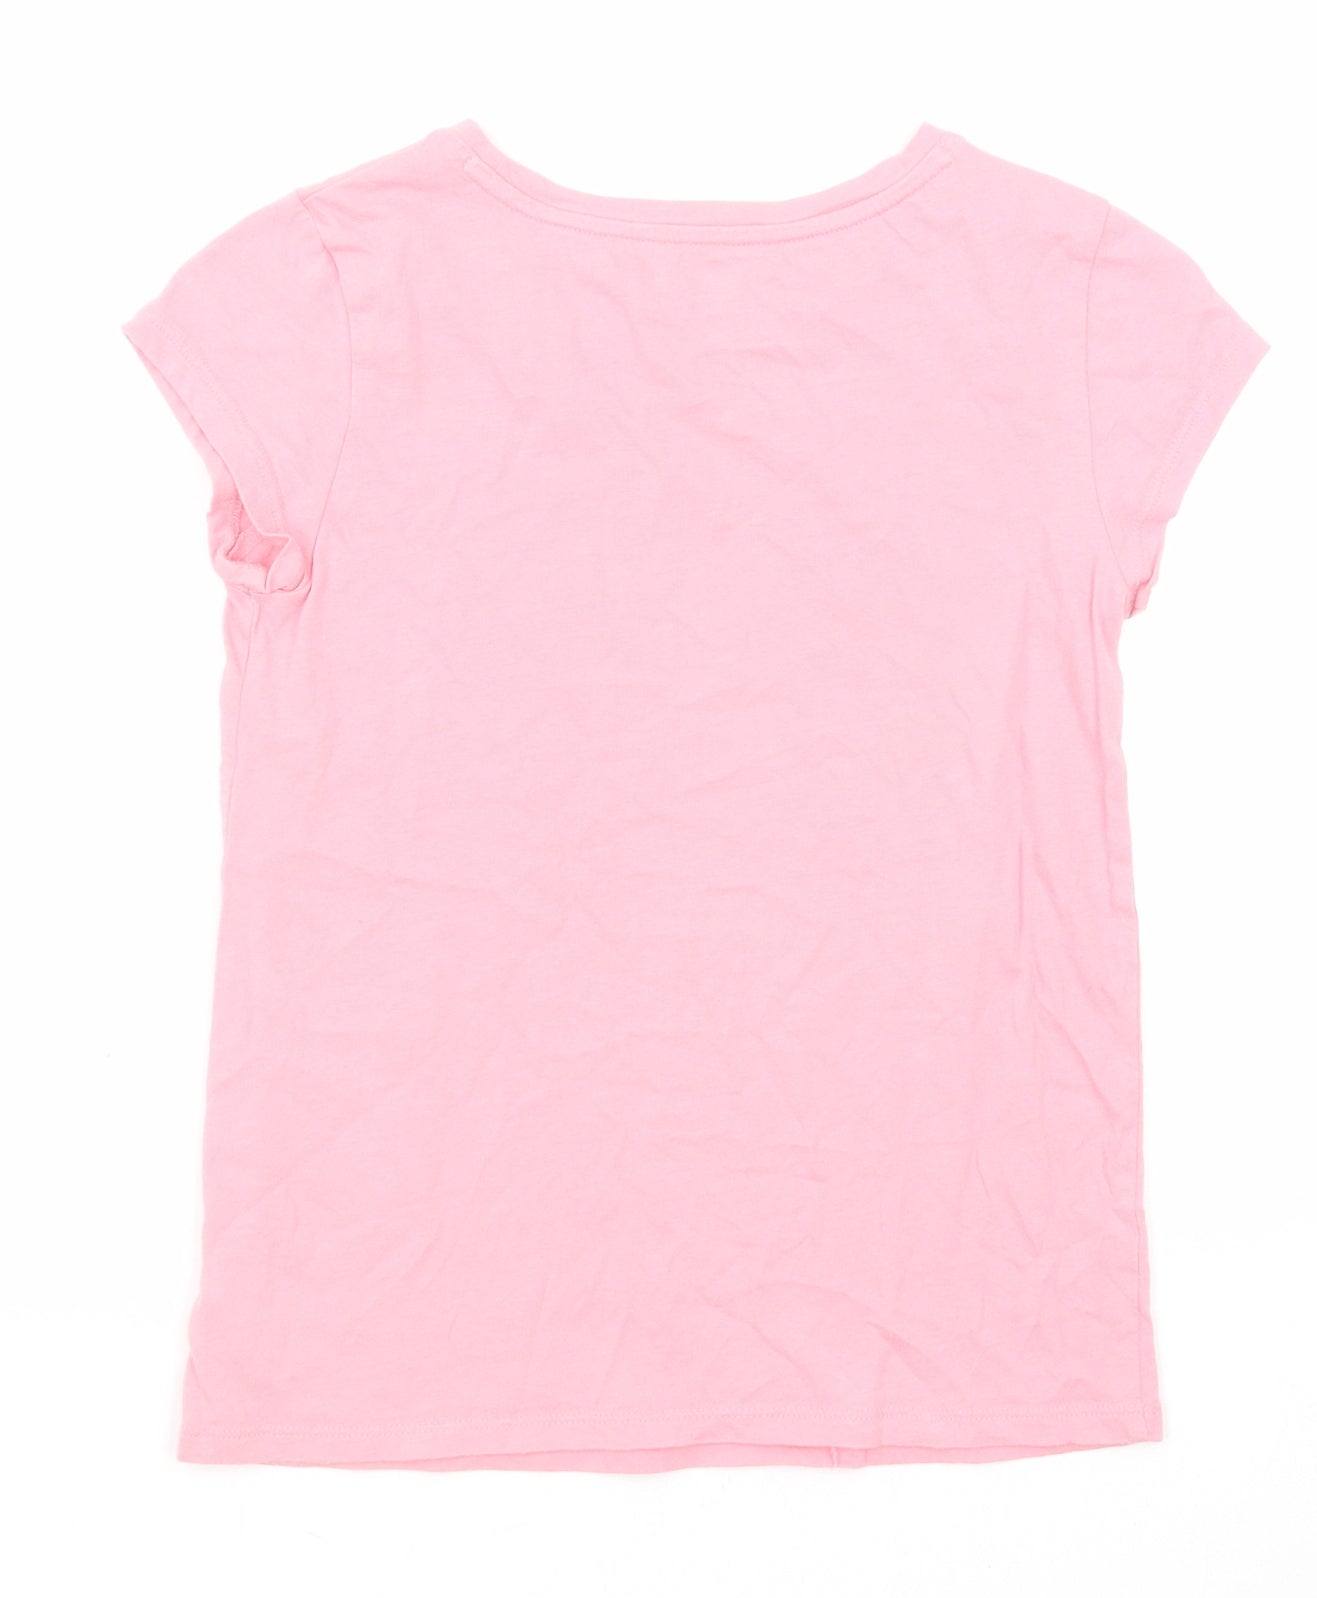 Gap Girls Pink Cotton Basic T-Shirt Size L Round Neck Pullover - Star Print